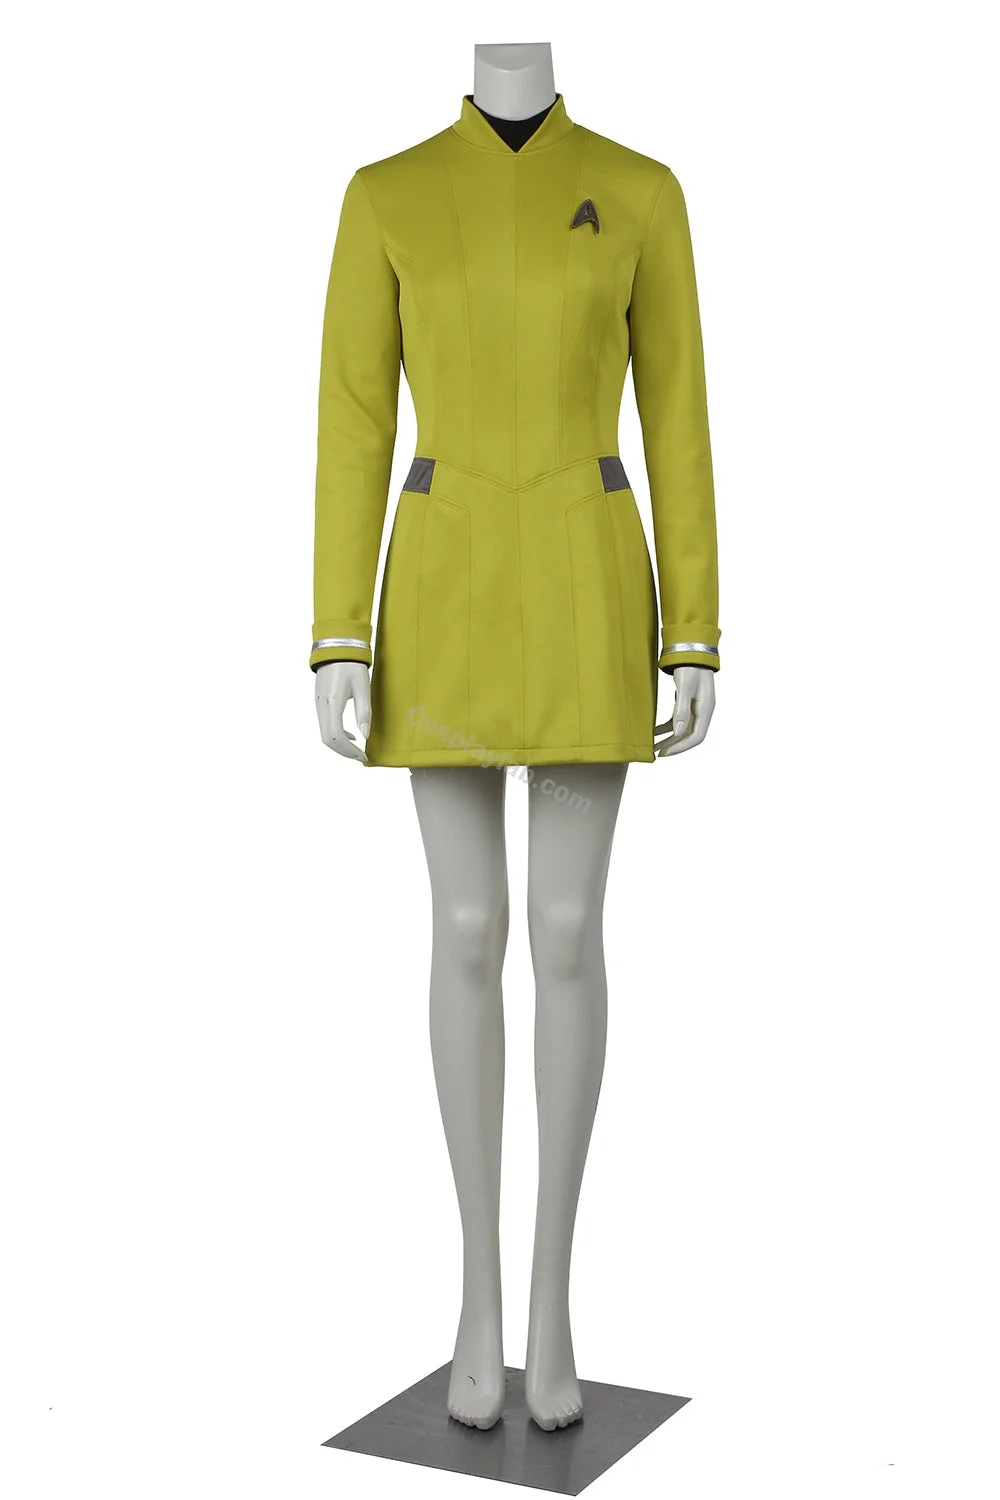 Star Trek Beyond Woman Uhura yellow Cosplay Costume Jacket